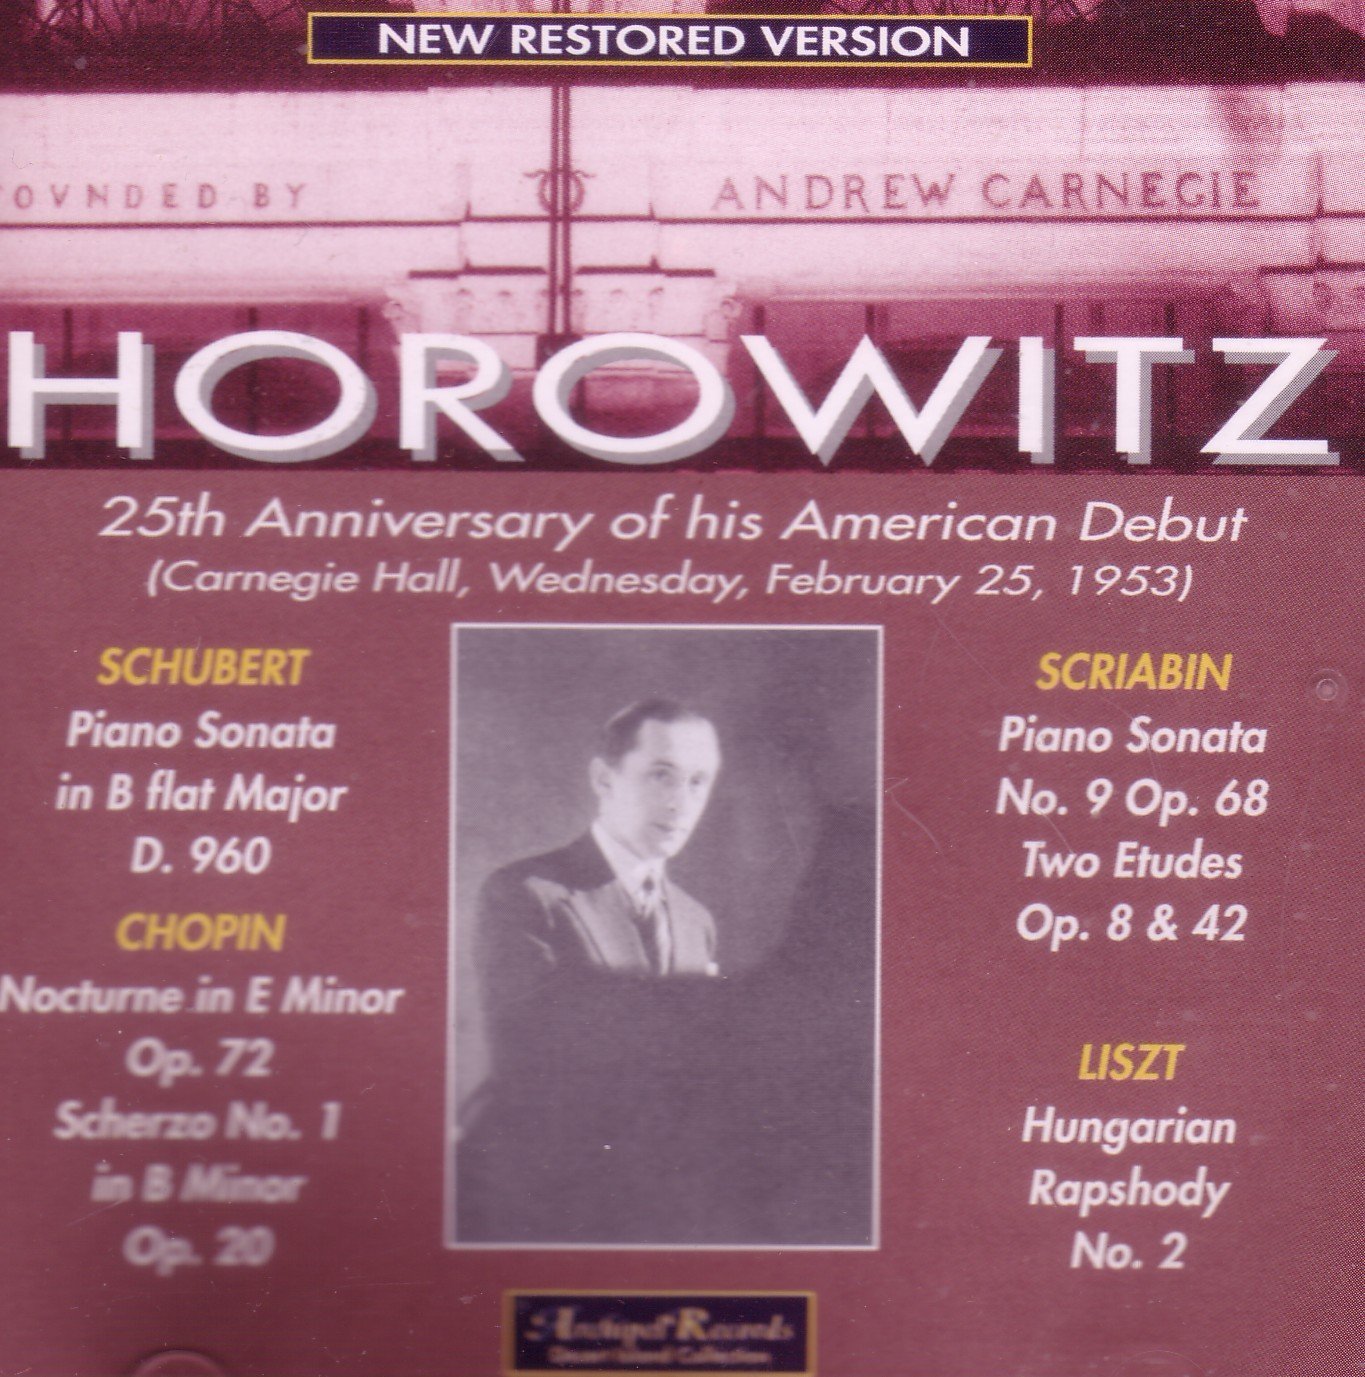 Horowitz: 25th Anniversary of his American Debut (Carnegie Hall, Feb. 25, 1953)